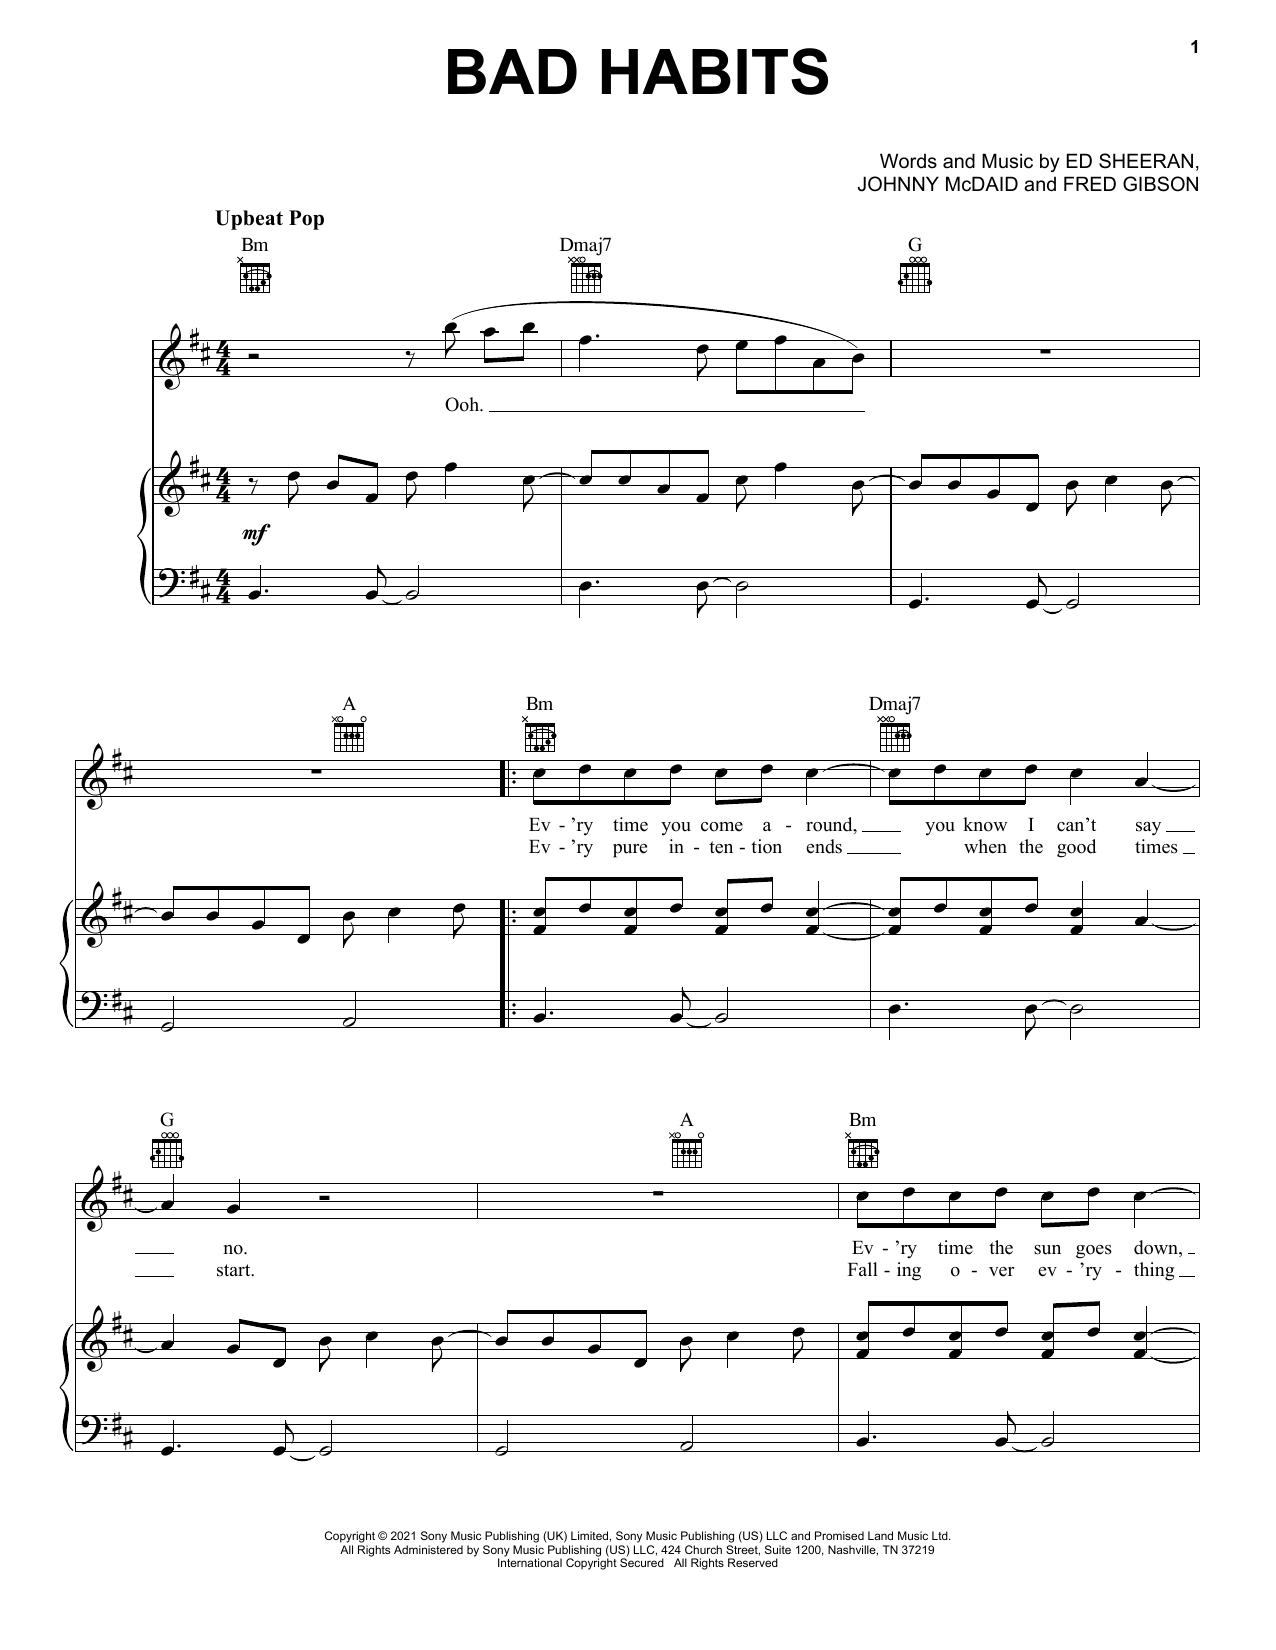 Ed Sheeran Bad Habits Sheet Music Notes & Chords for Really Easy Piano - Download or Print PDF